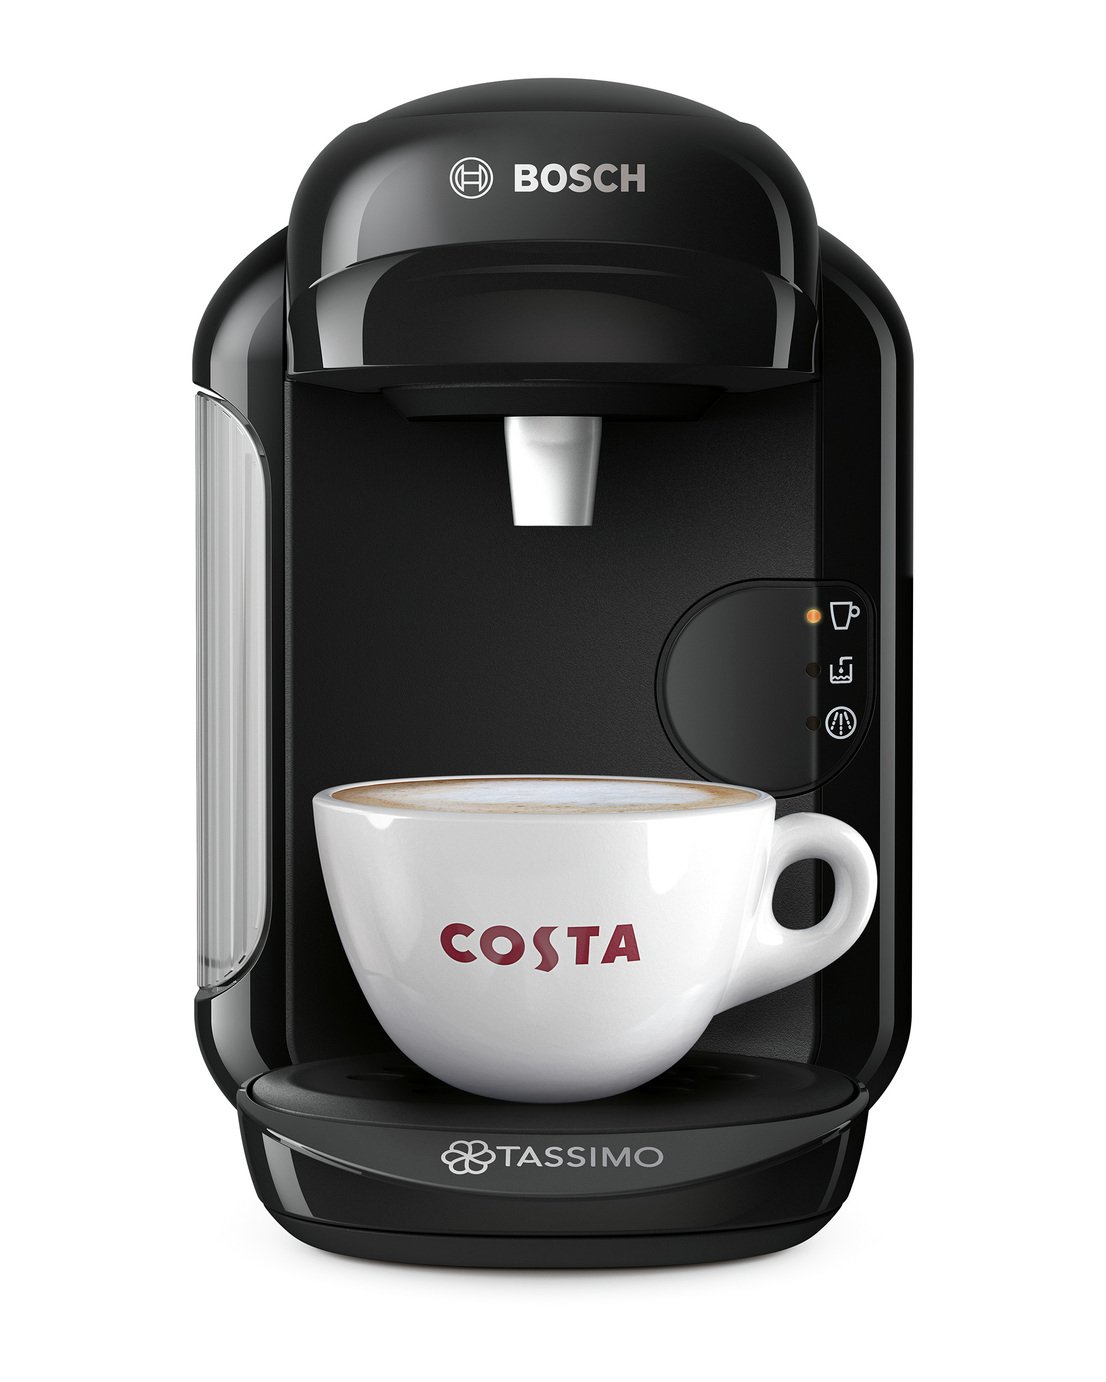 Best Priced Checked Hourly On Tassimo By Bosch My Way Tas6002gb Pod Coffee Machine Black